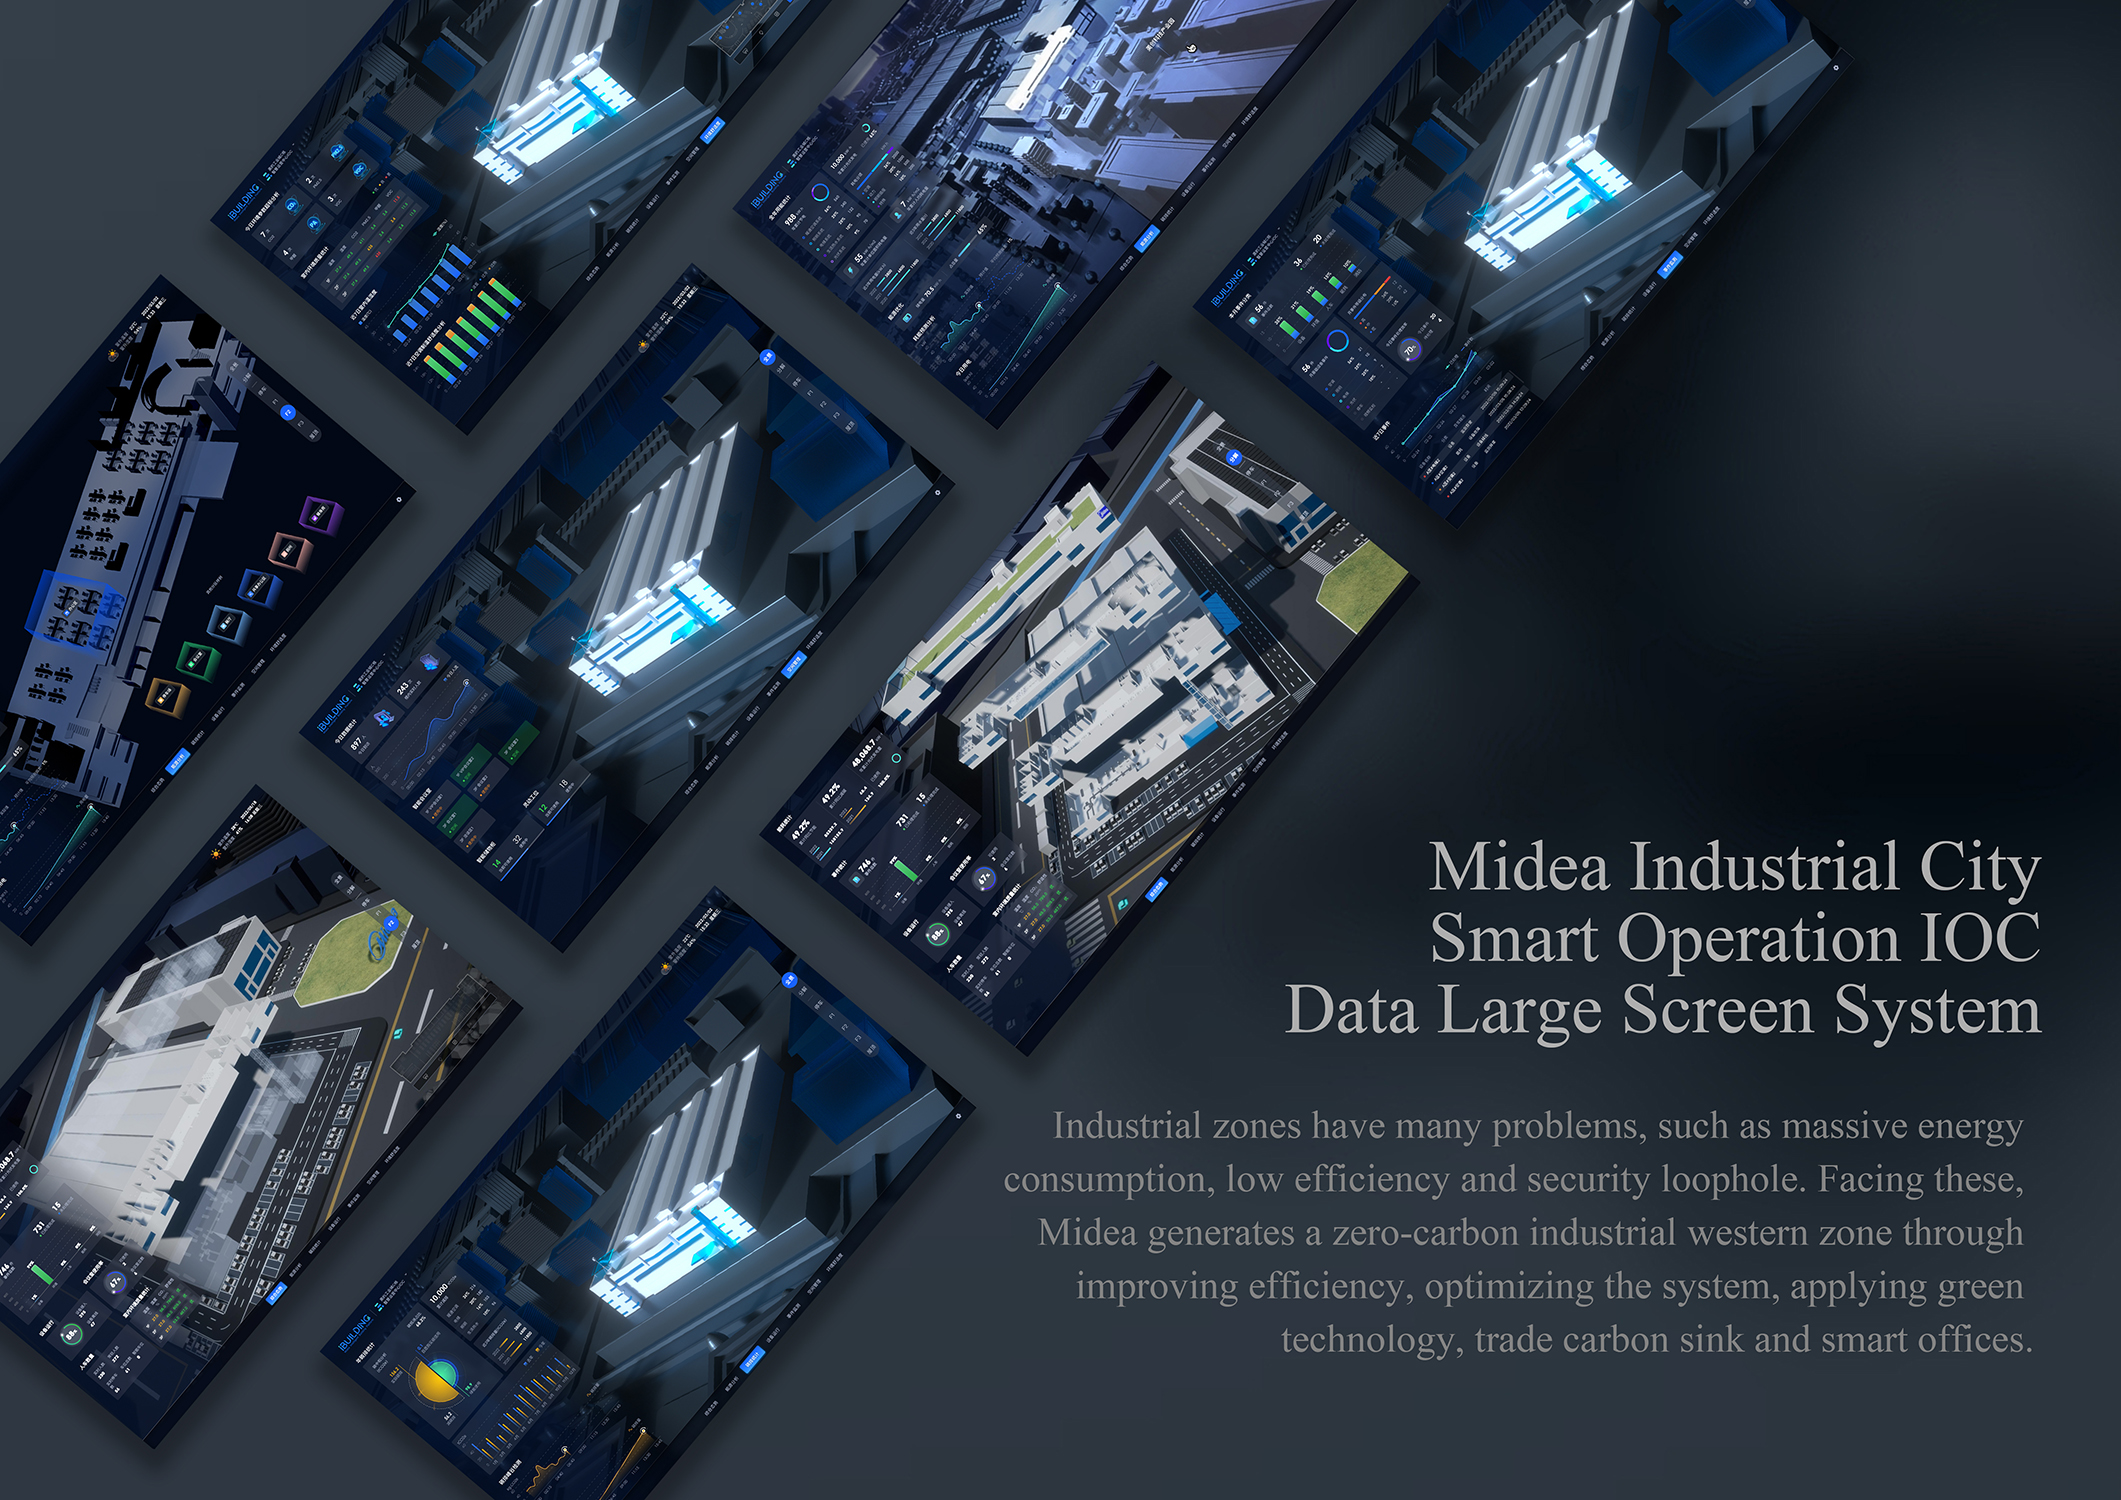 Midea Industrial City smart operation of IOC